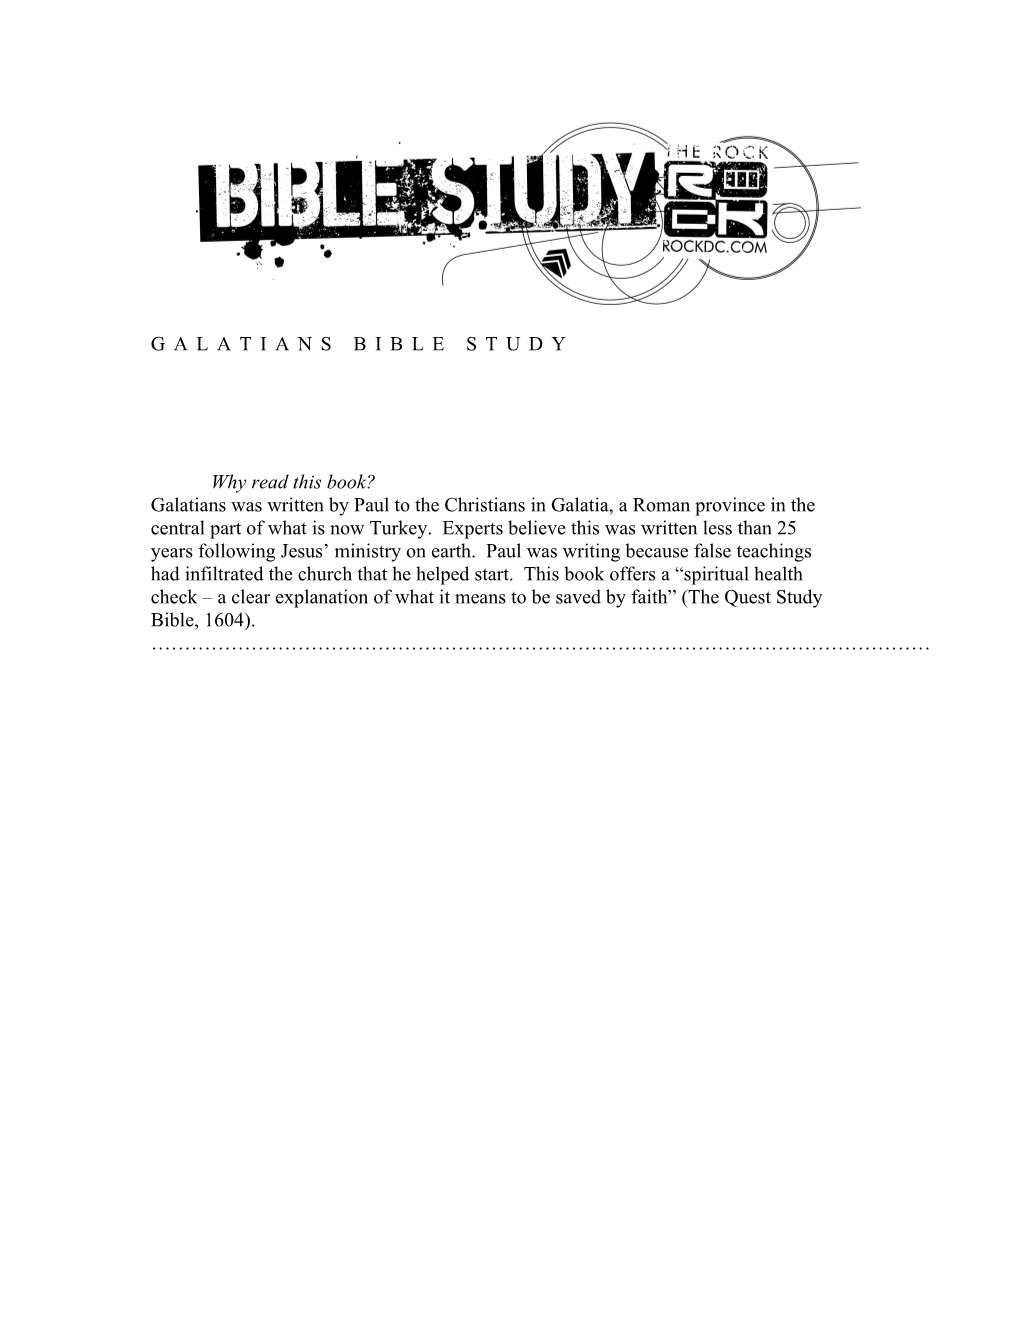 Galatians Bible Study